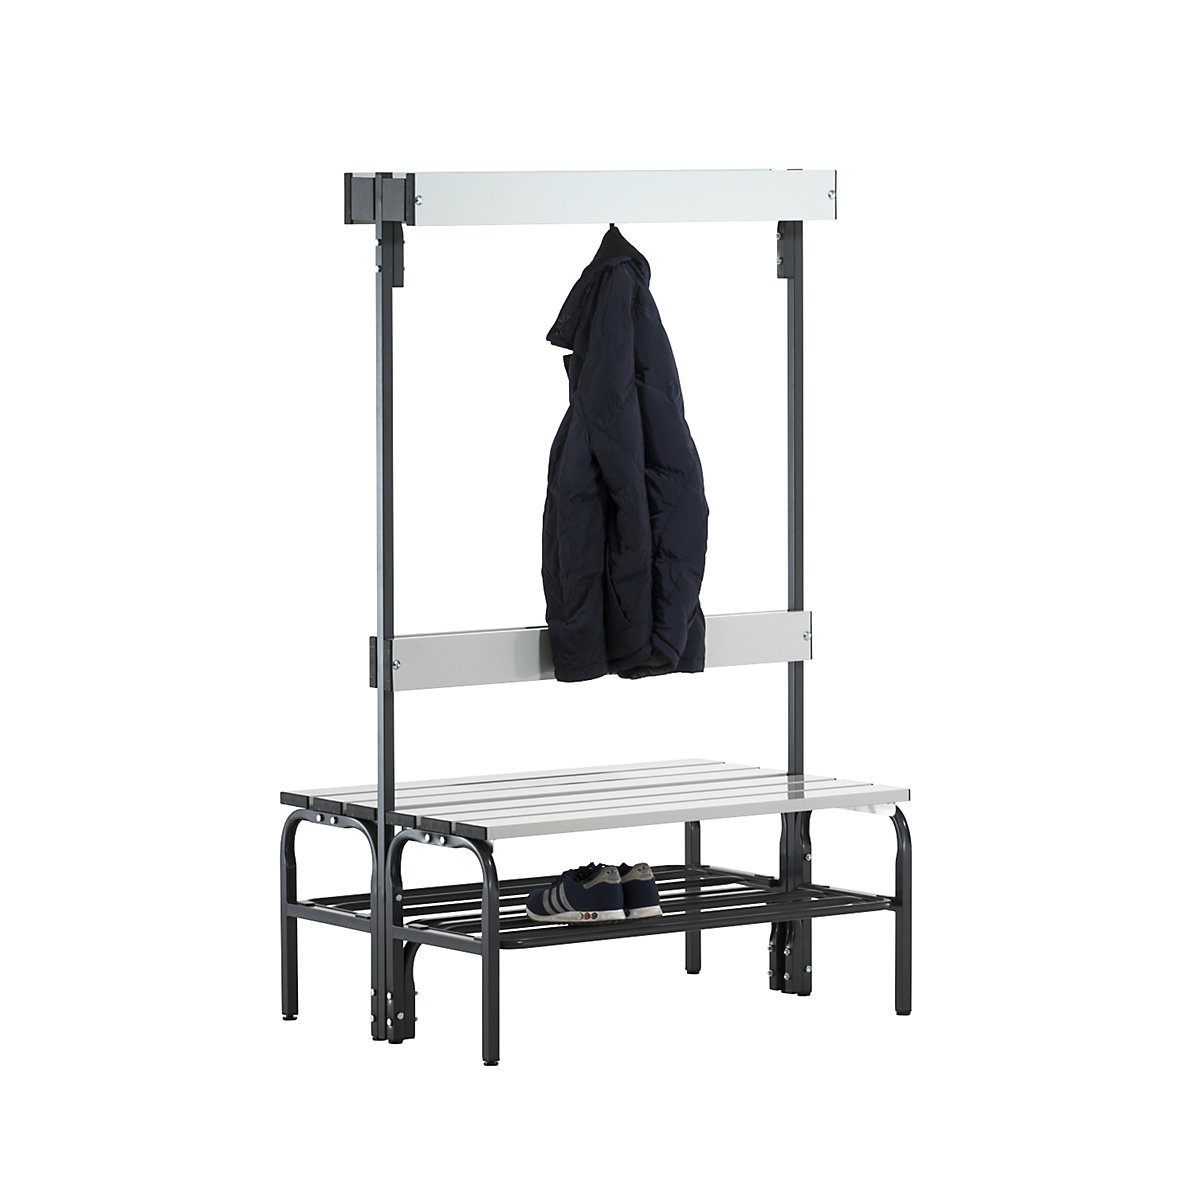 Sypro – Changing room bench with aluminium slats (Product illustration 12)